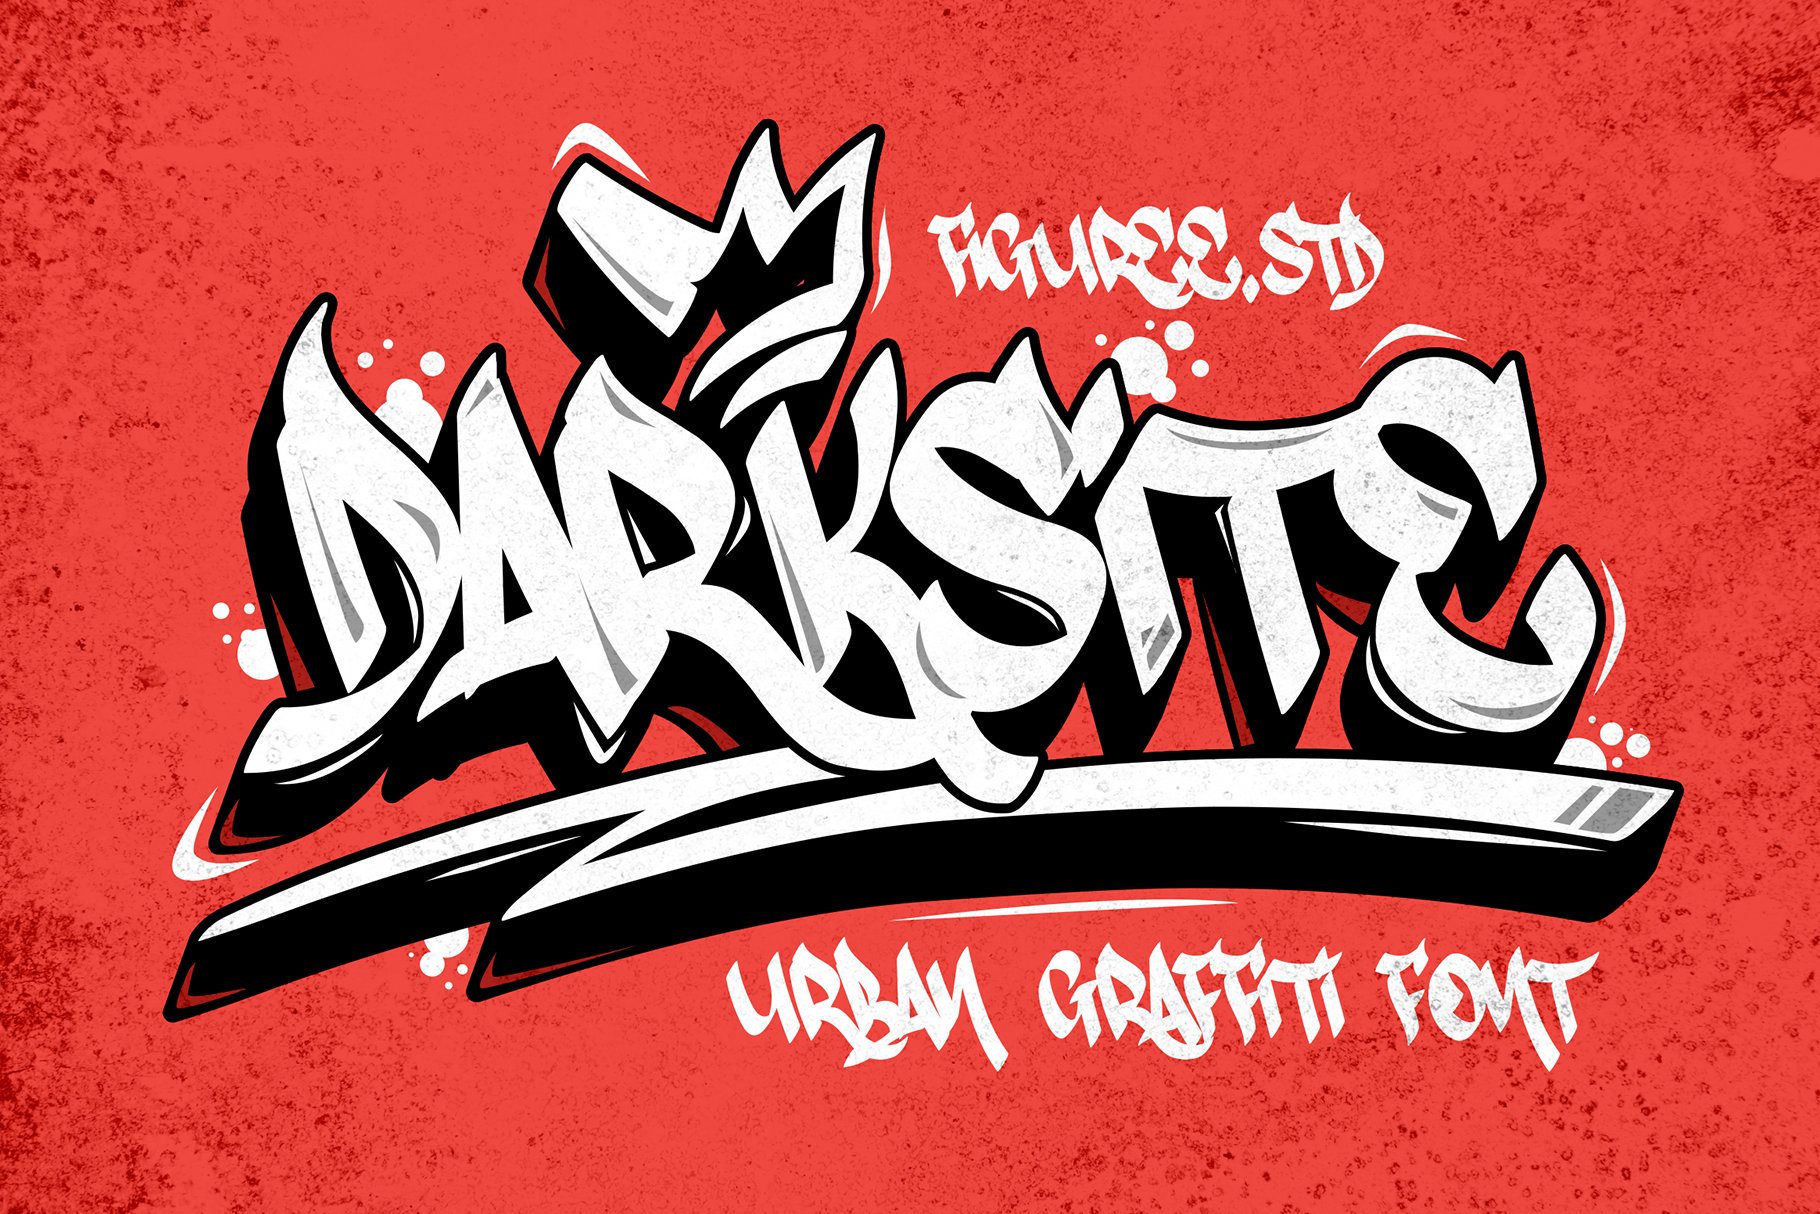 Darksite - Urban Graffiti Font cover image.